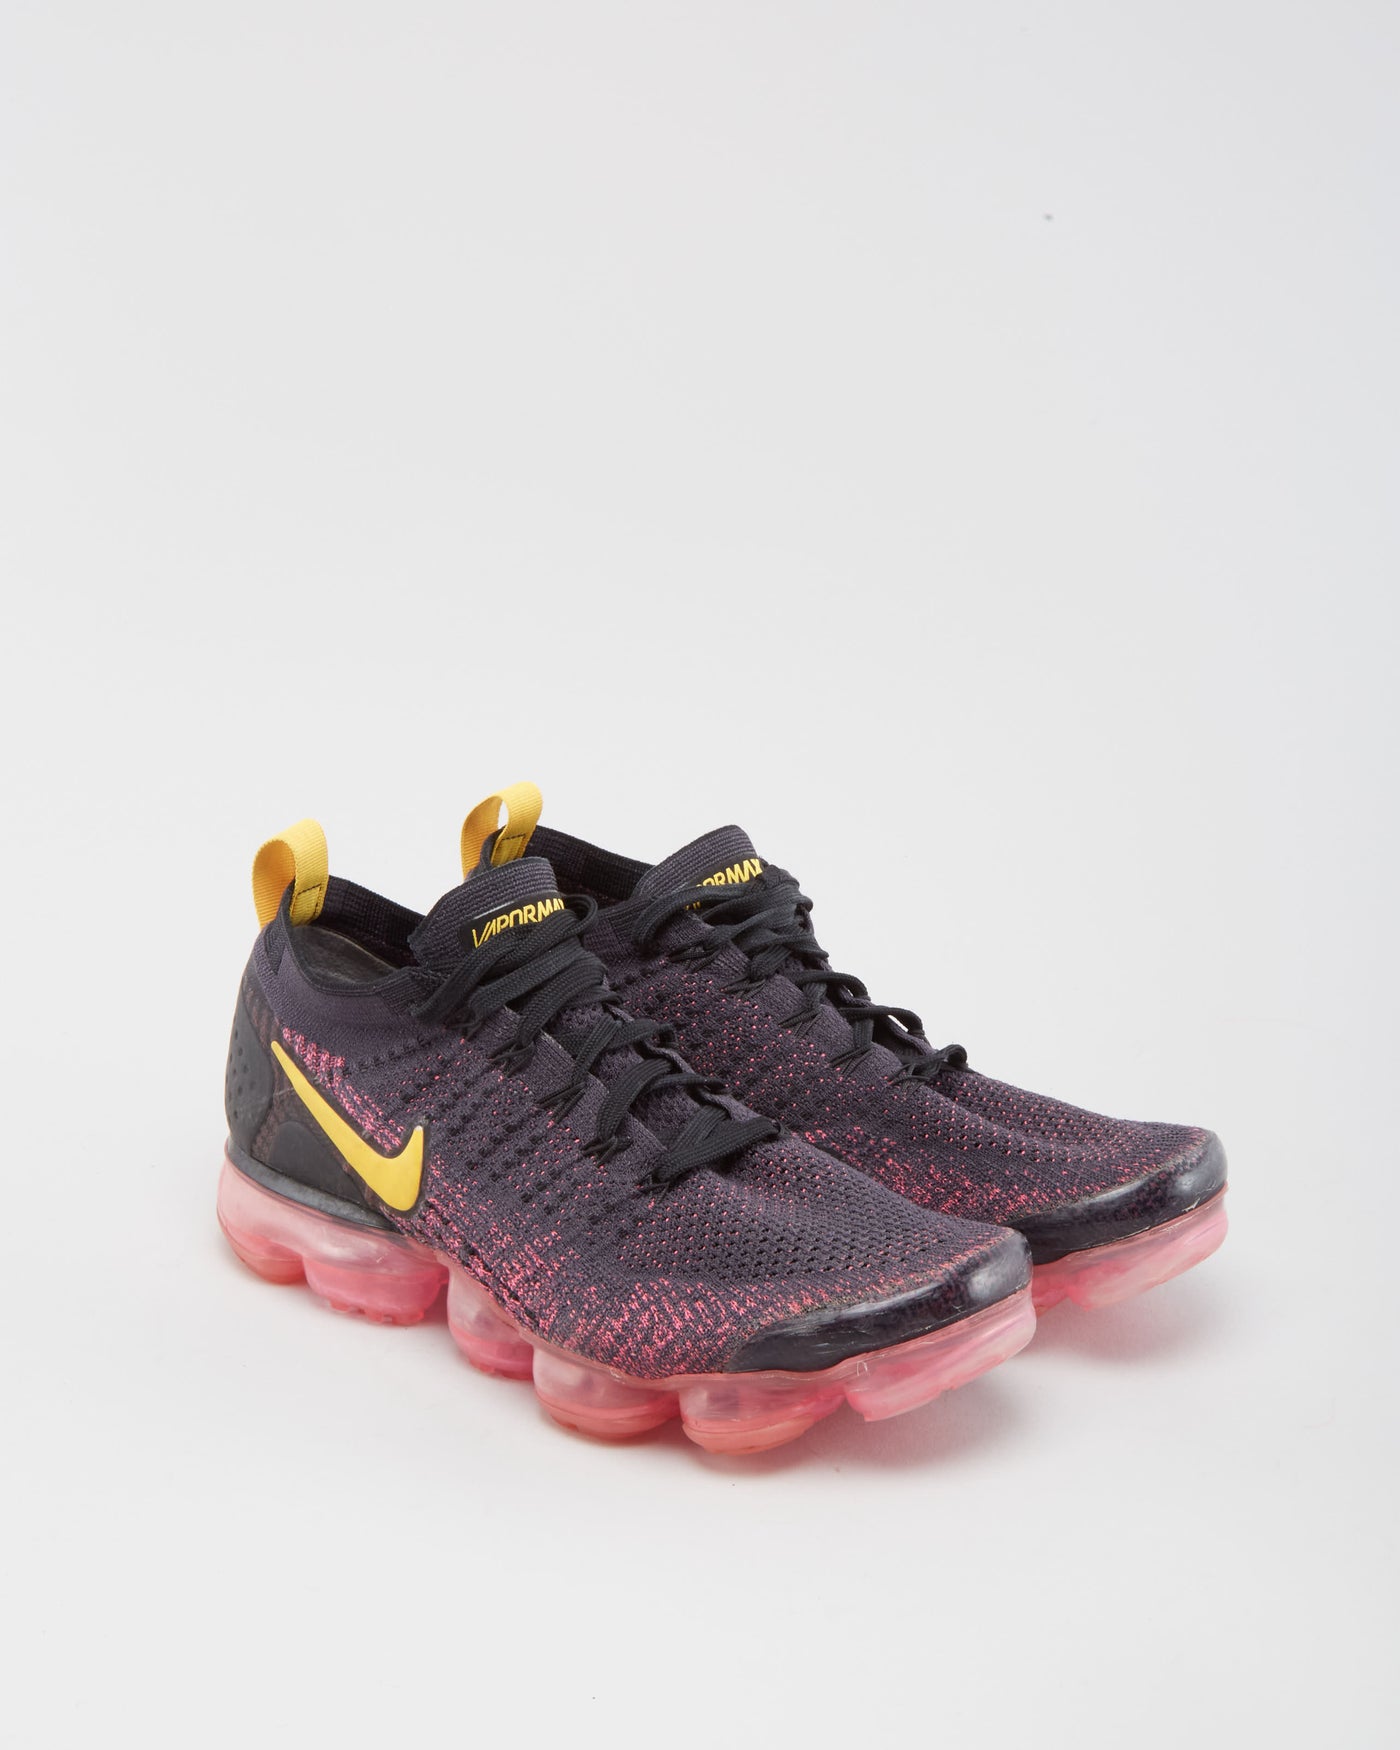 Nike Vapormax Pink / Purple / Black Trainers - UK7